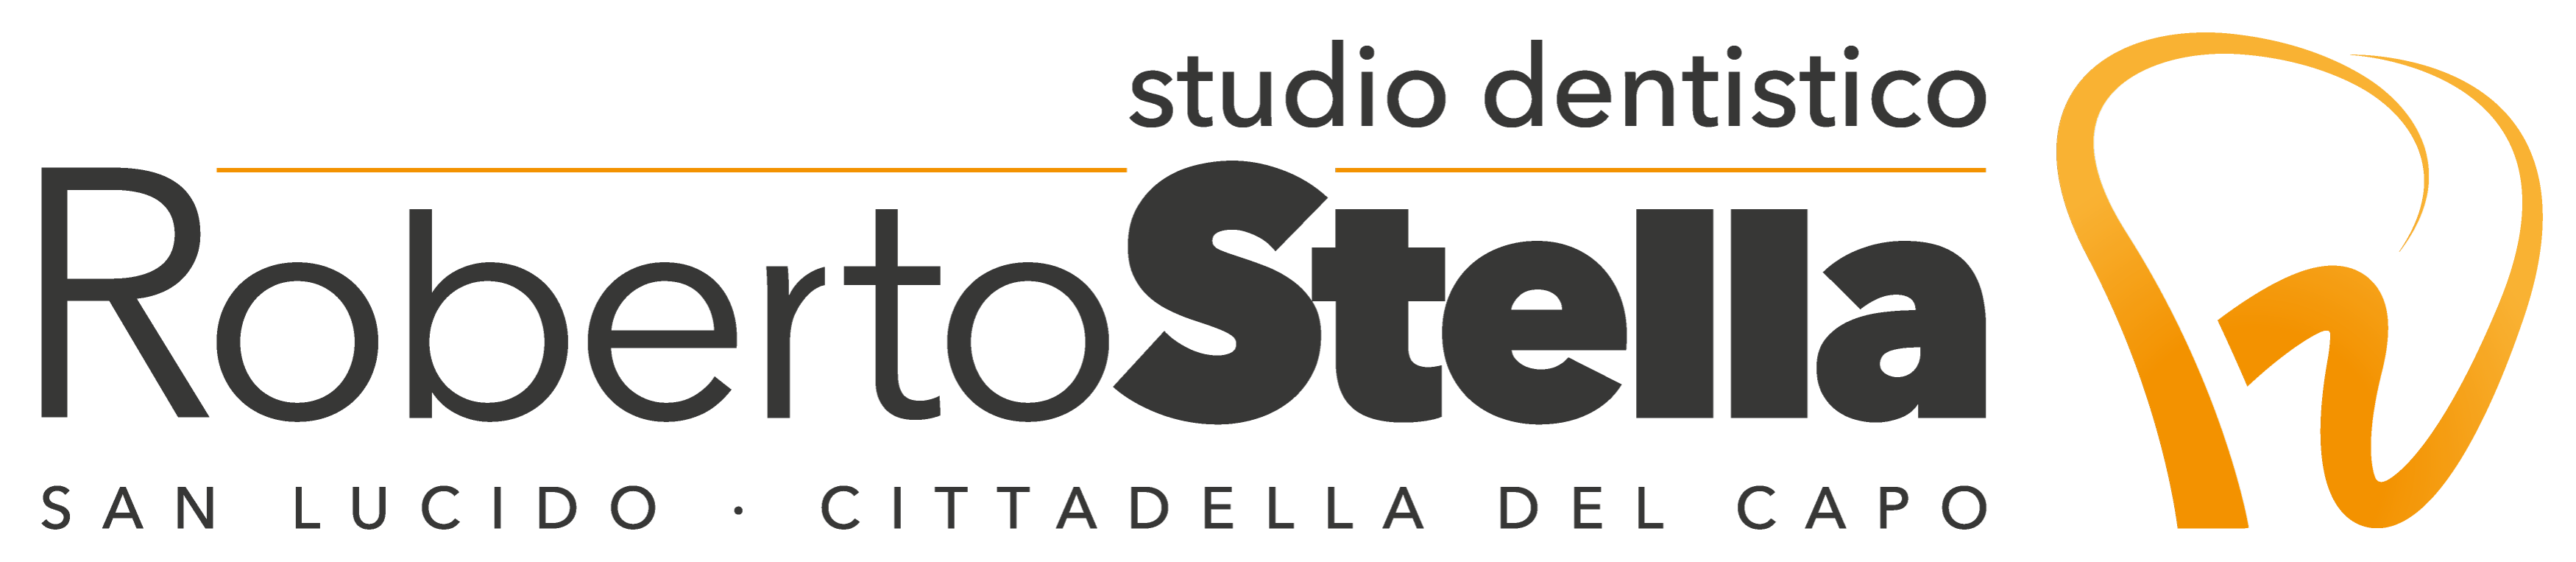 Studio Roberto Stella